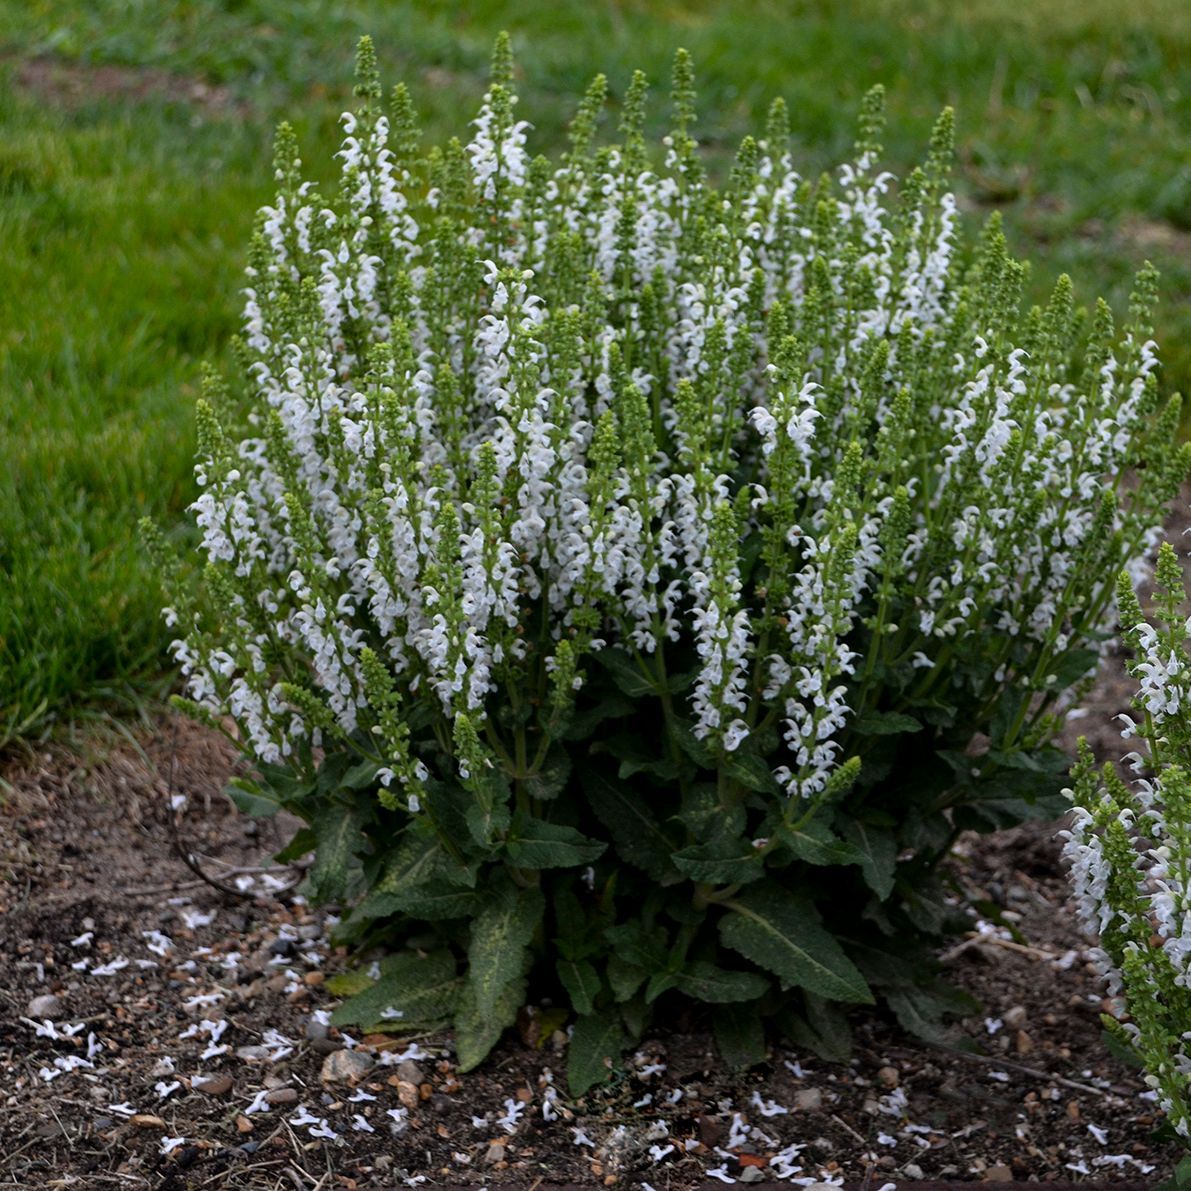 White Profusion Salvia perennial for sale in Lebanon